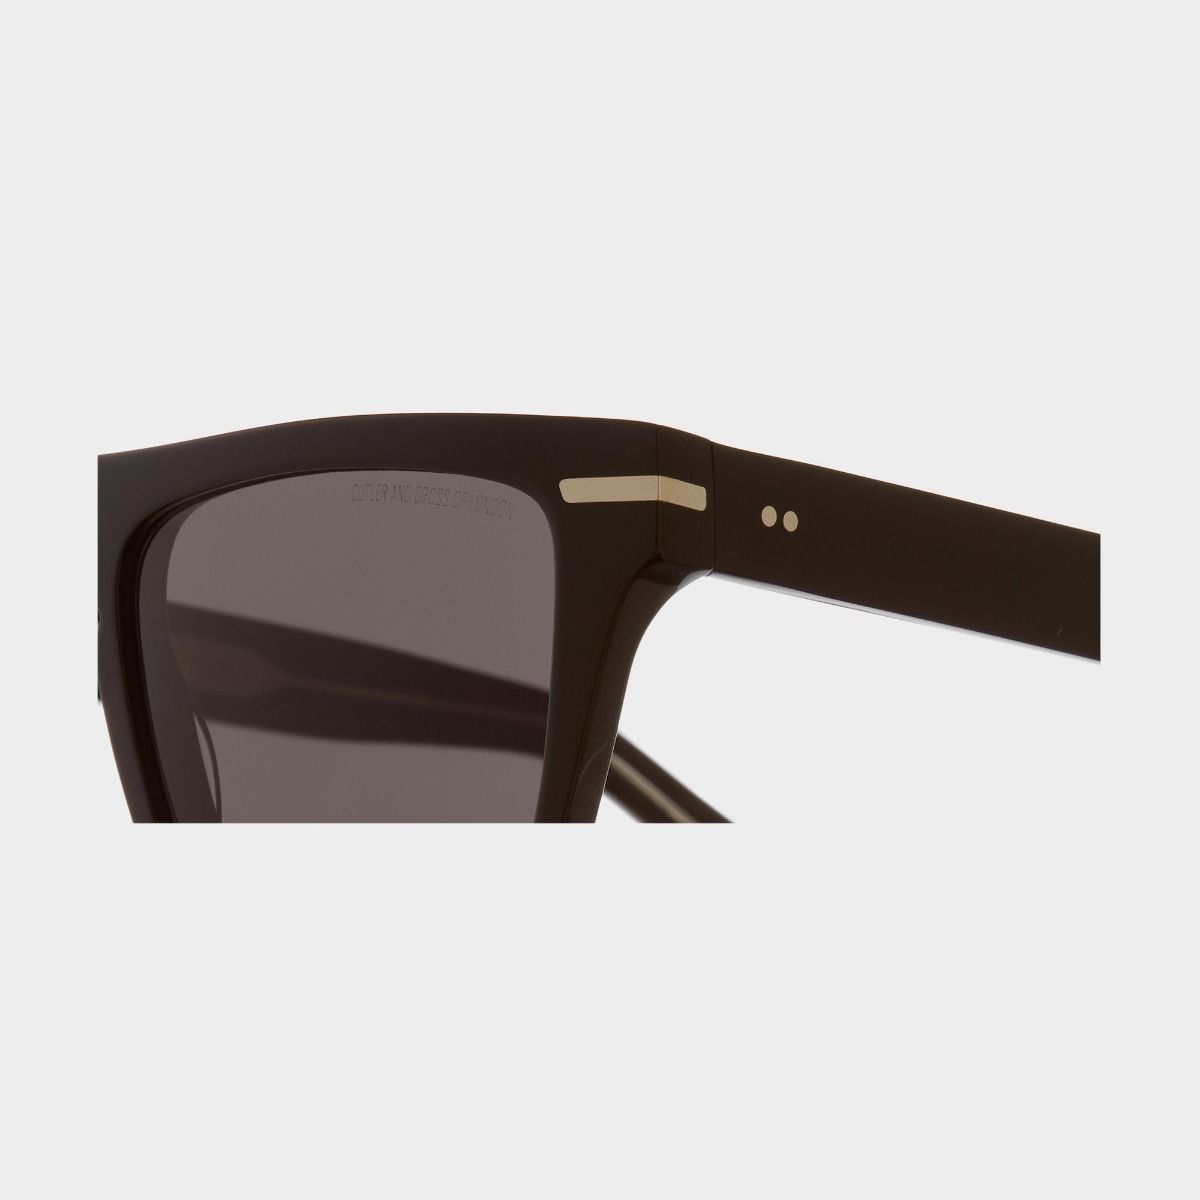 1357 D-Frame Sunglasses